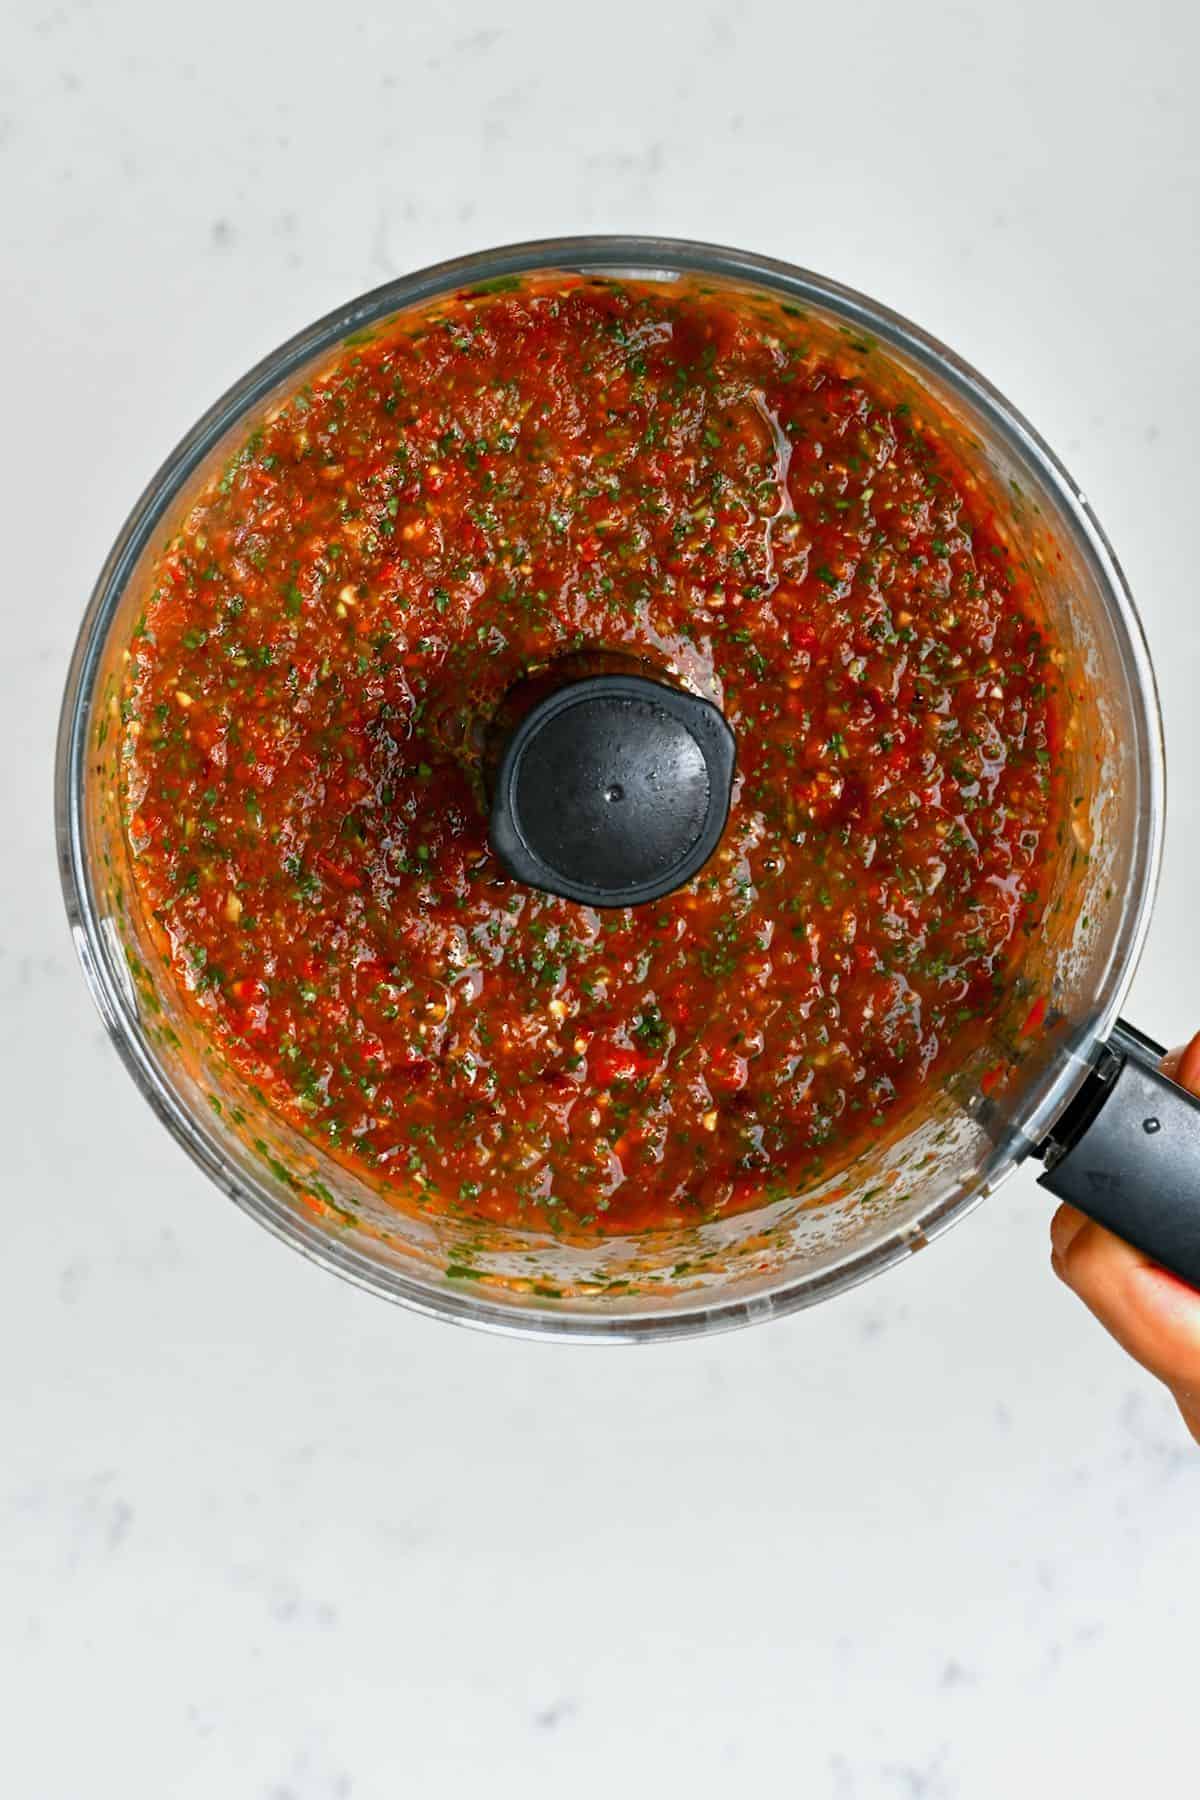 Roasted tomato salsa in a food processor